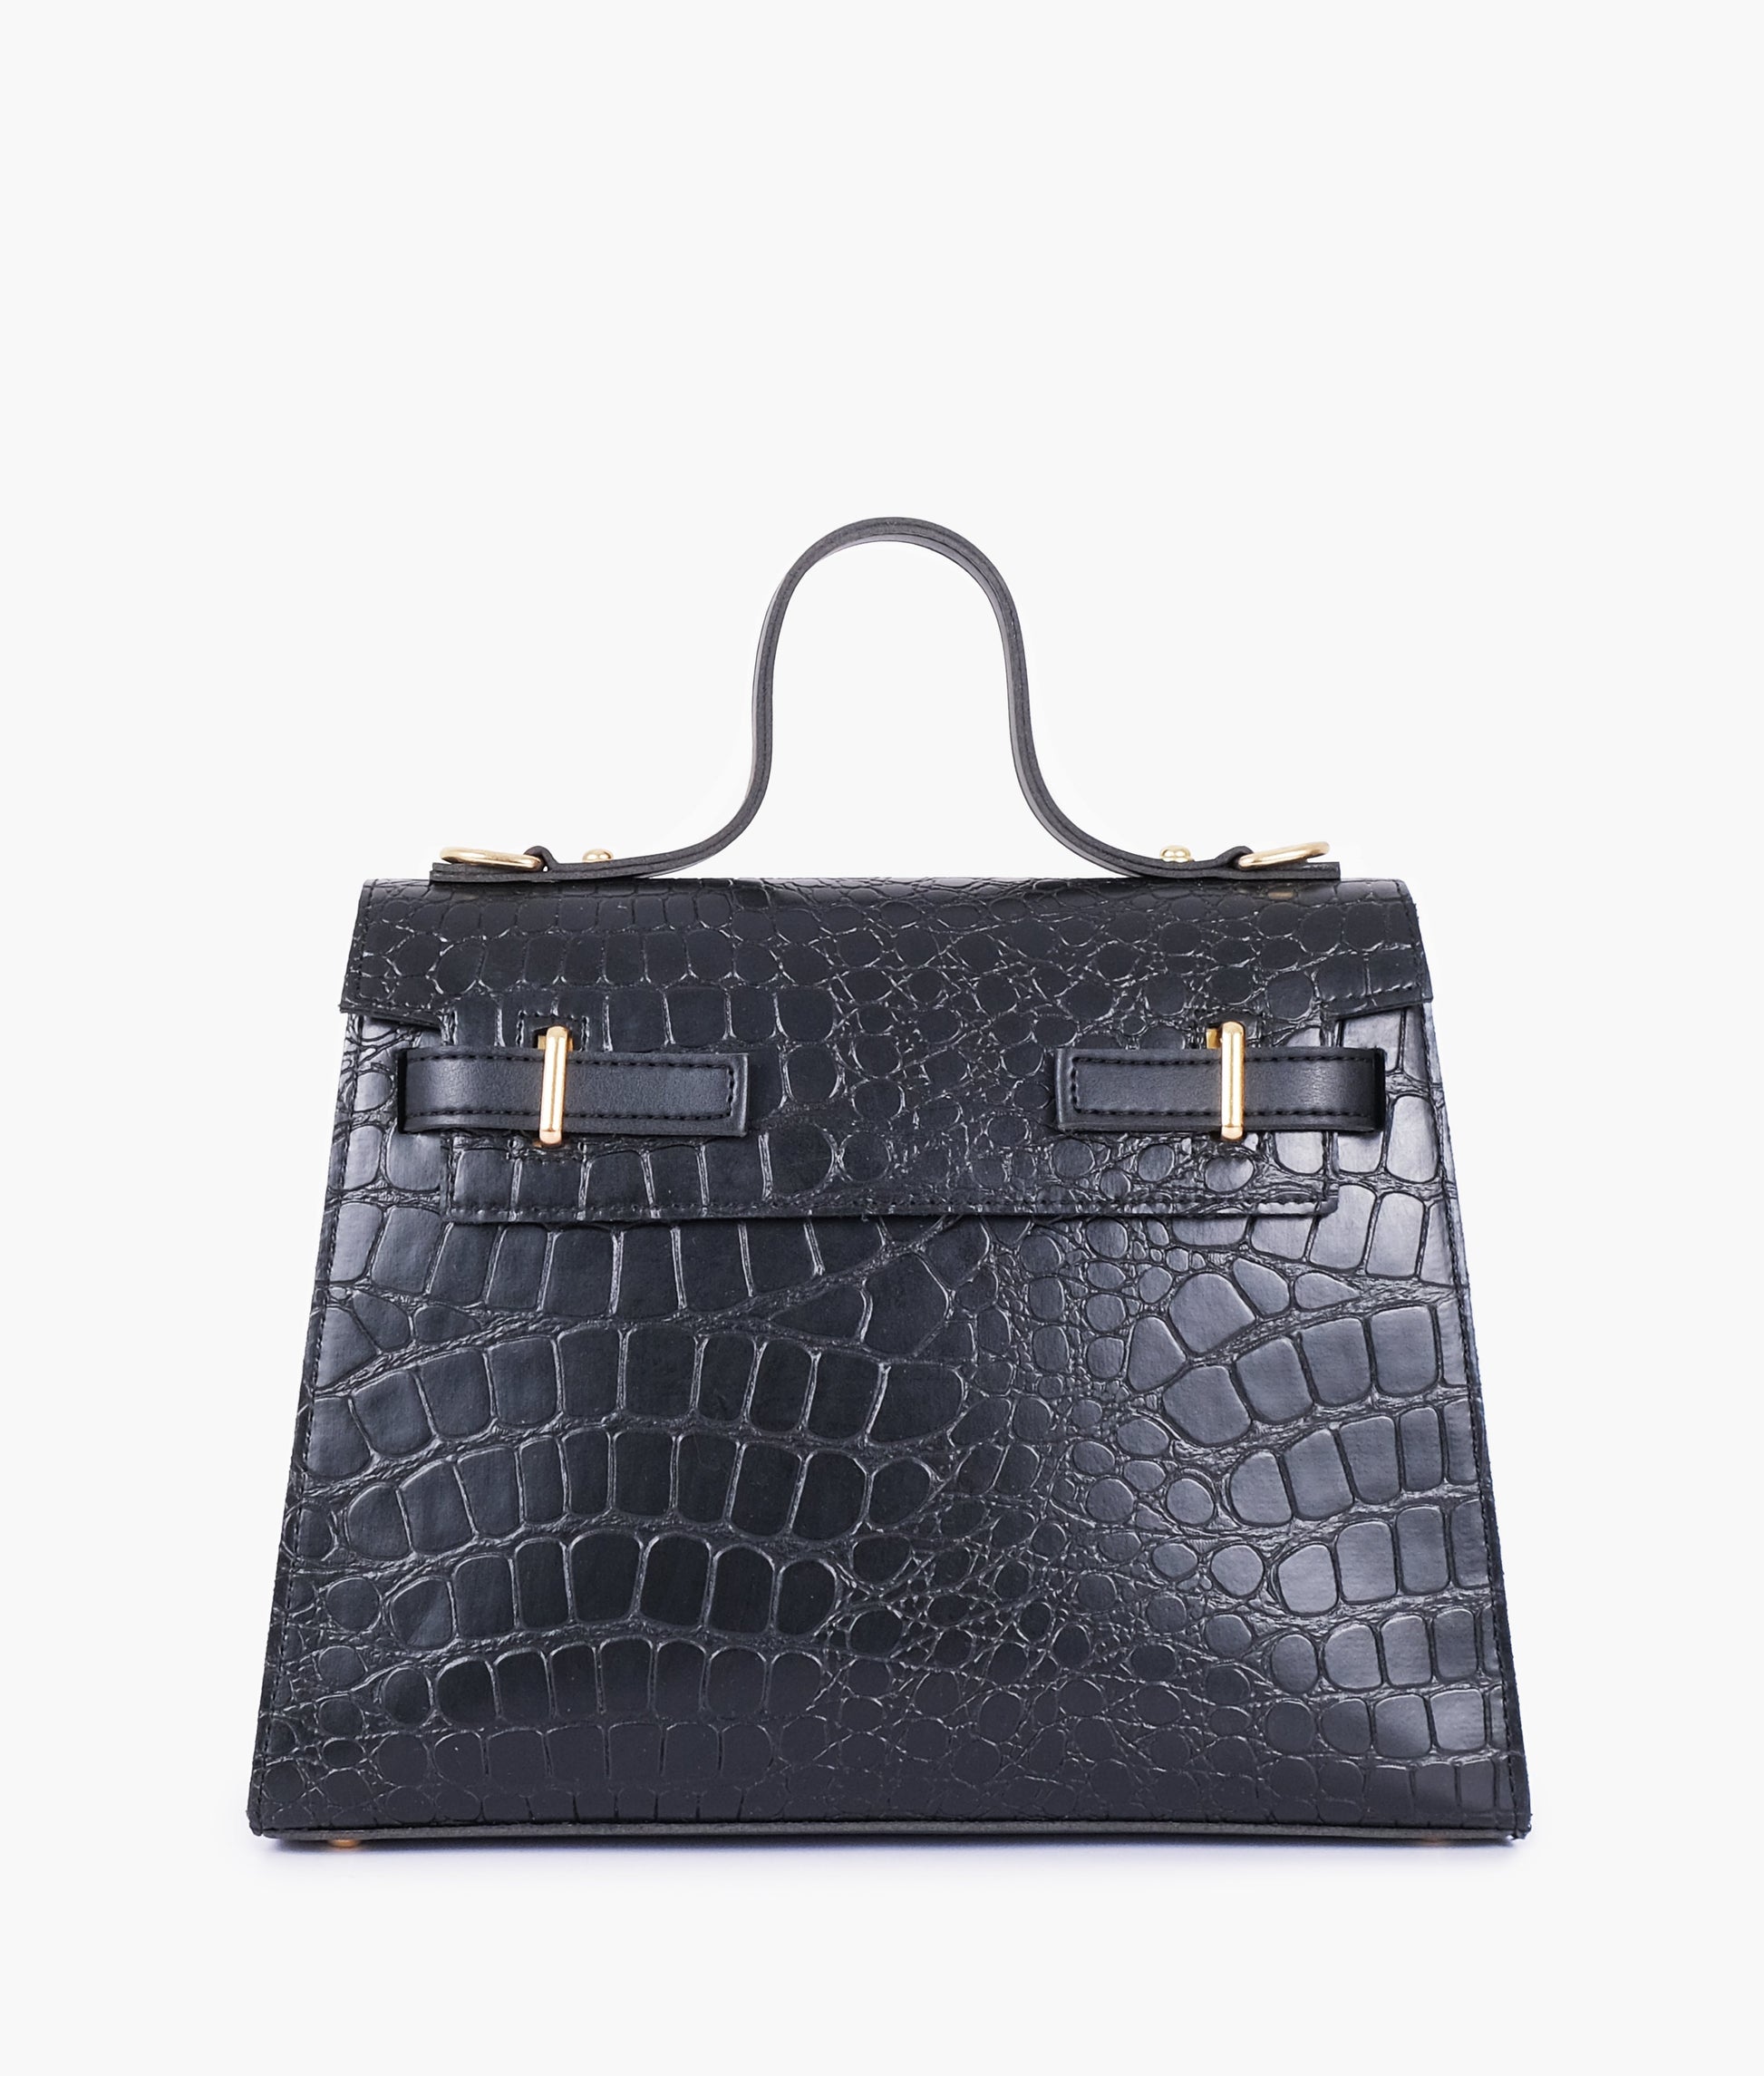 Buy Black Crocodile Cross Body Bag With Top Handle - Black in Pakistan